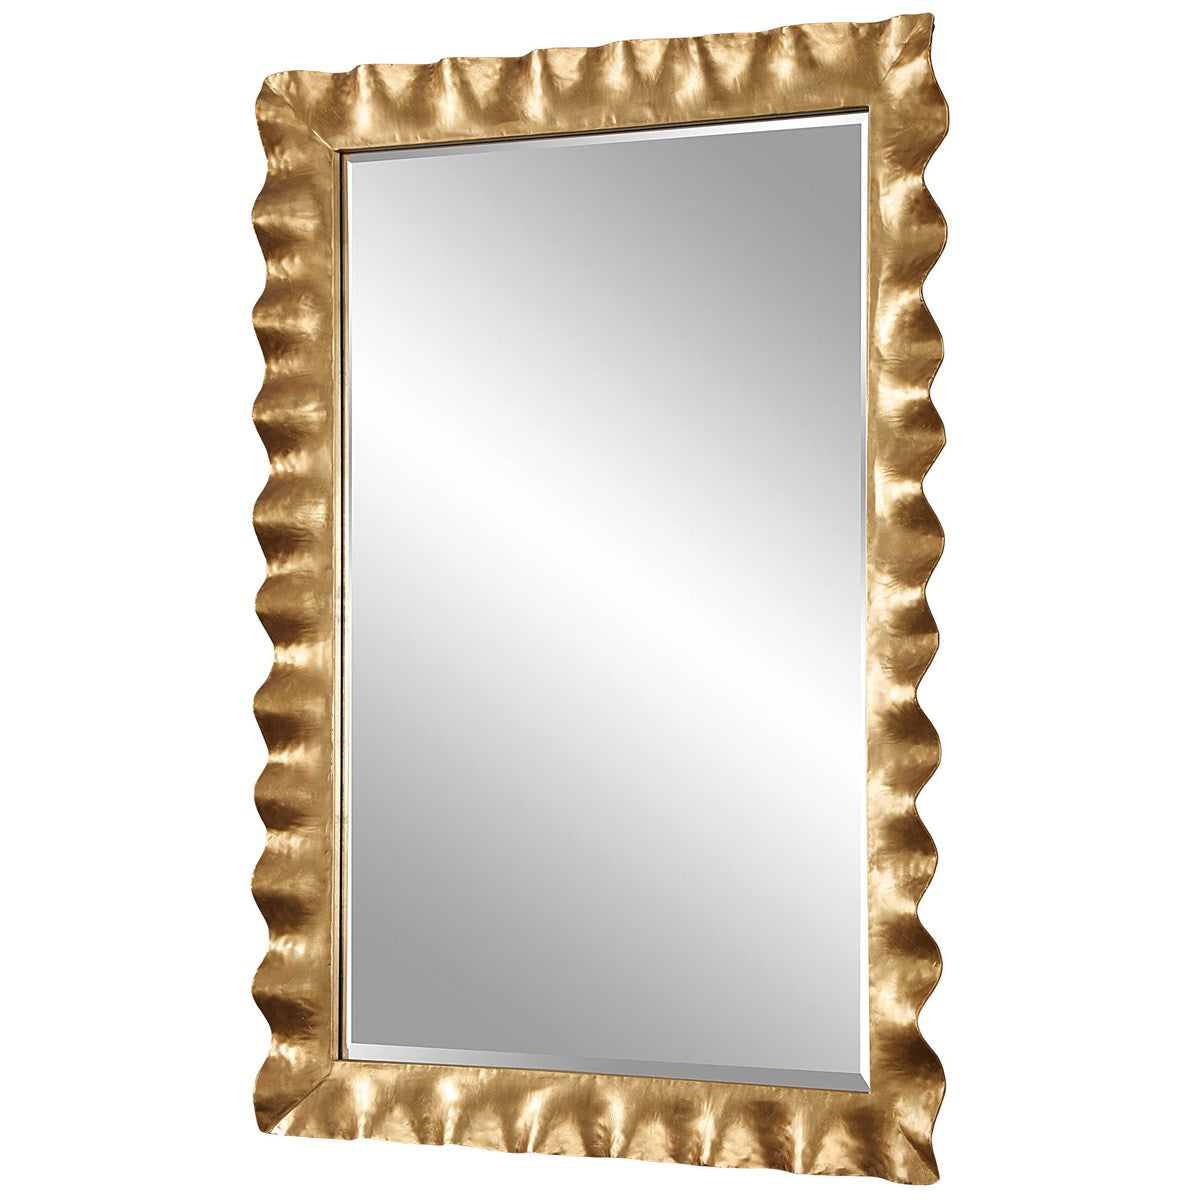 Scalloped GL rectangle mirror